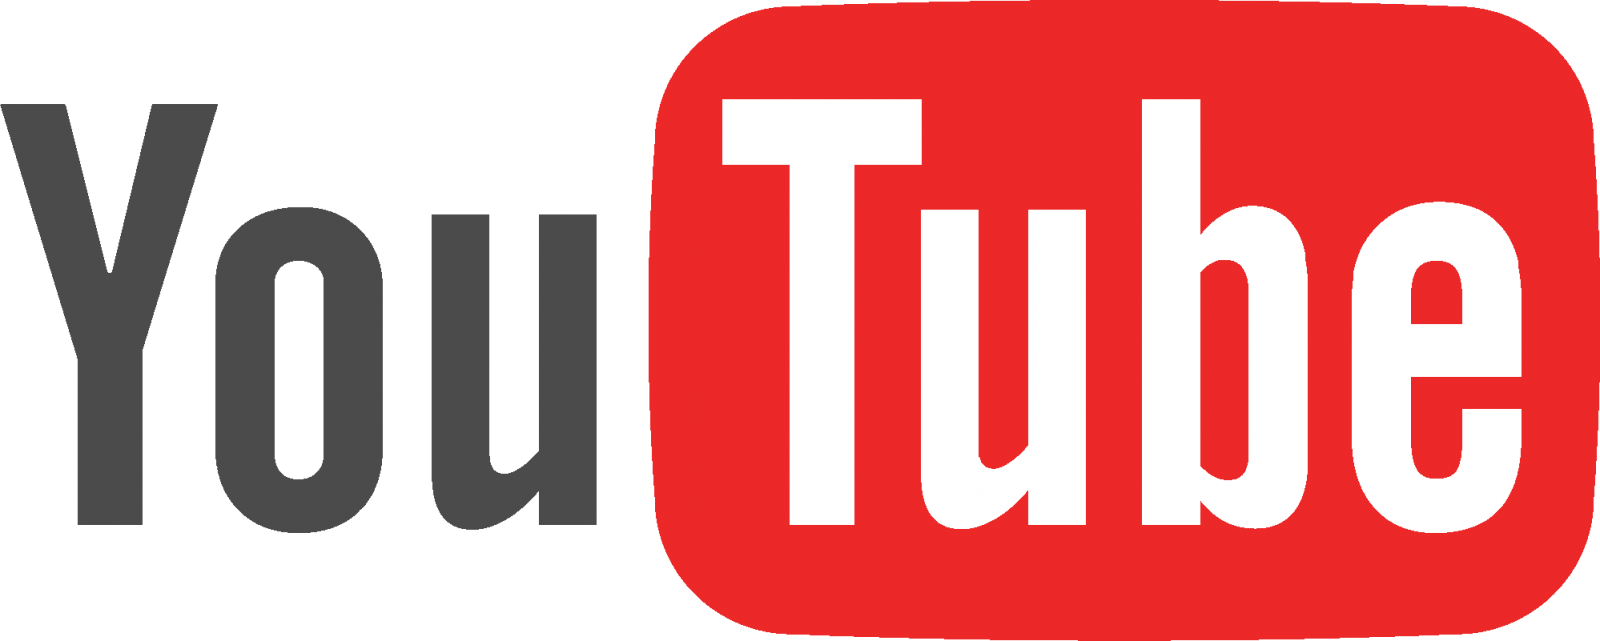 Youtube-logo-2014.png